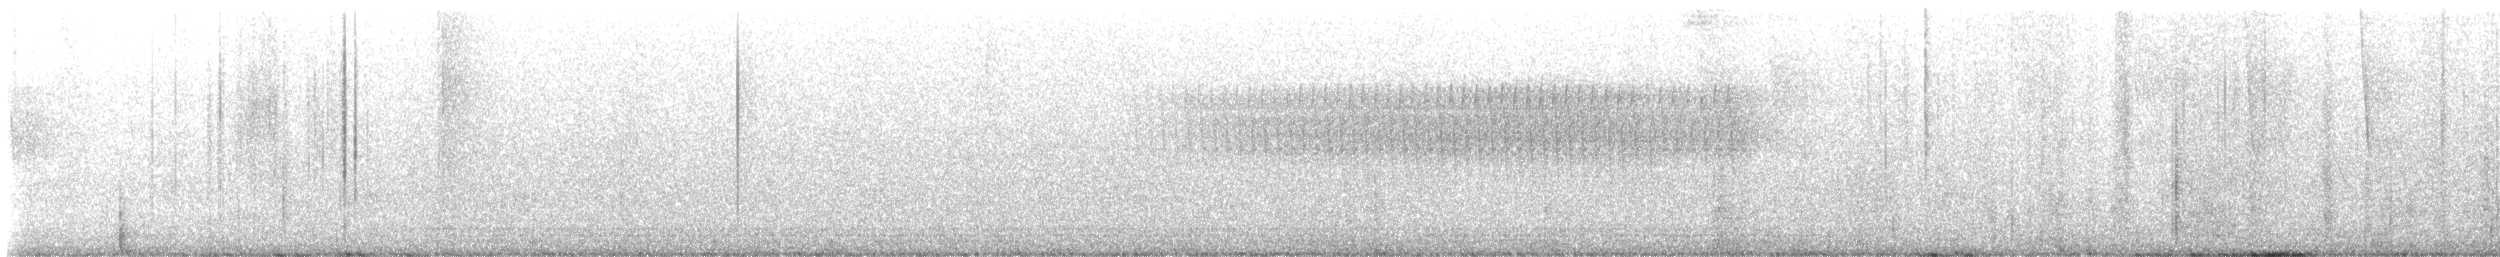 Paruline vermivore - ML620066173